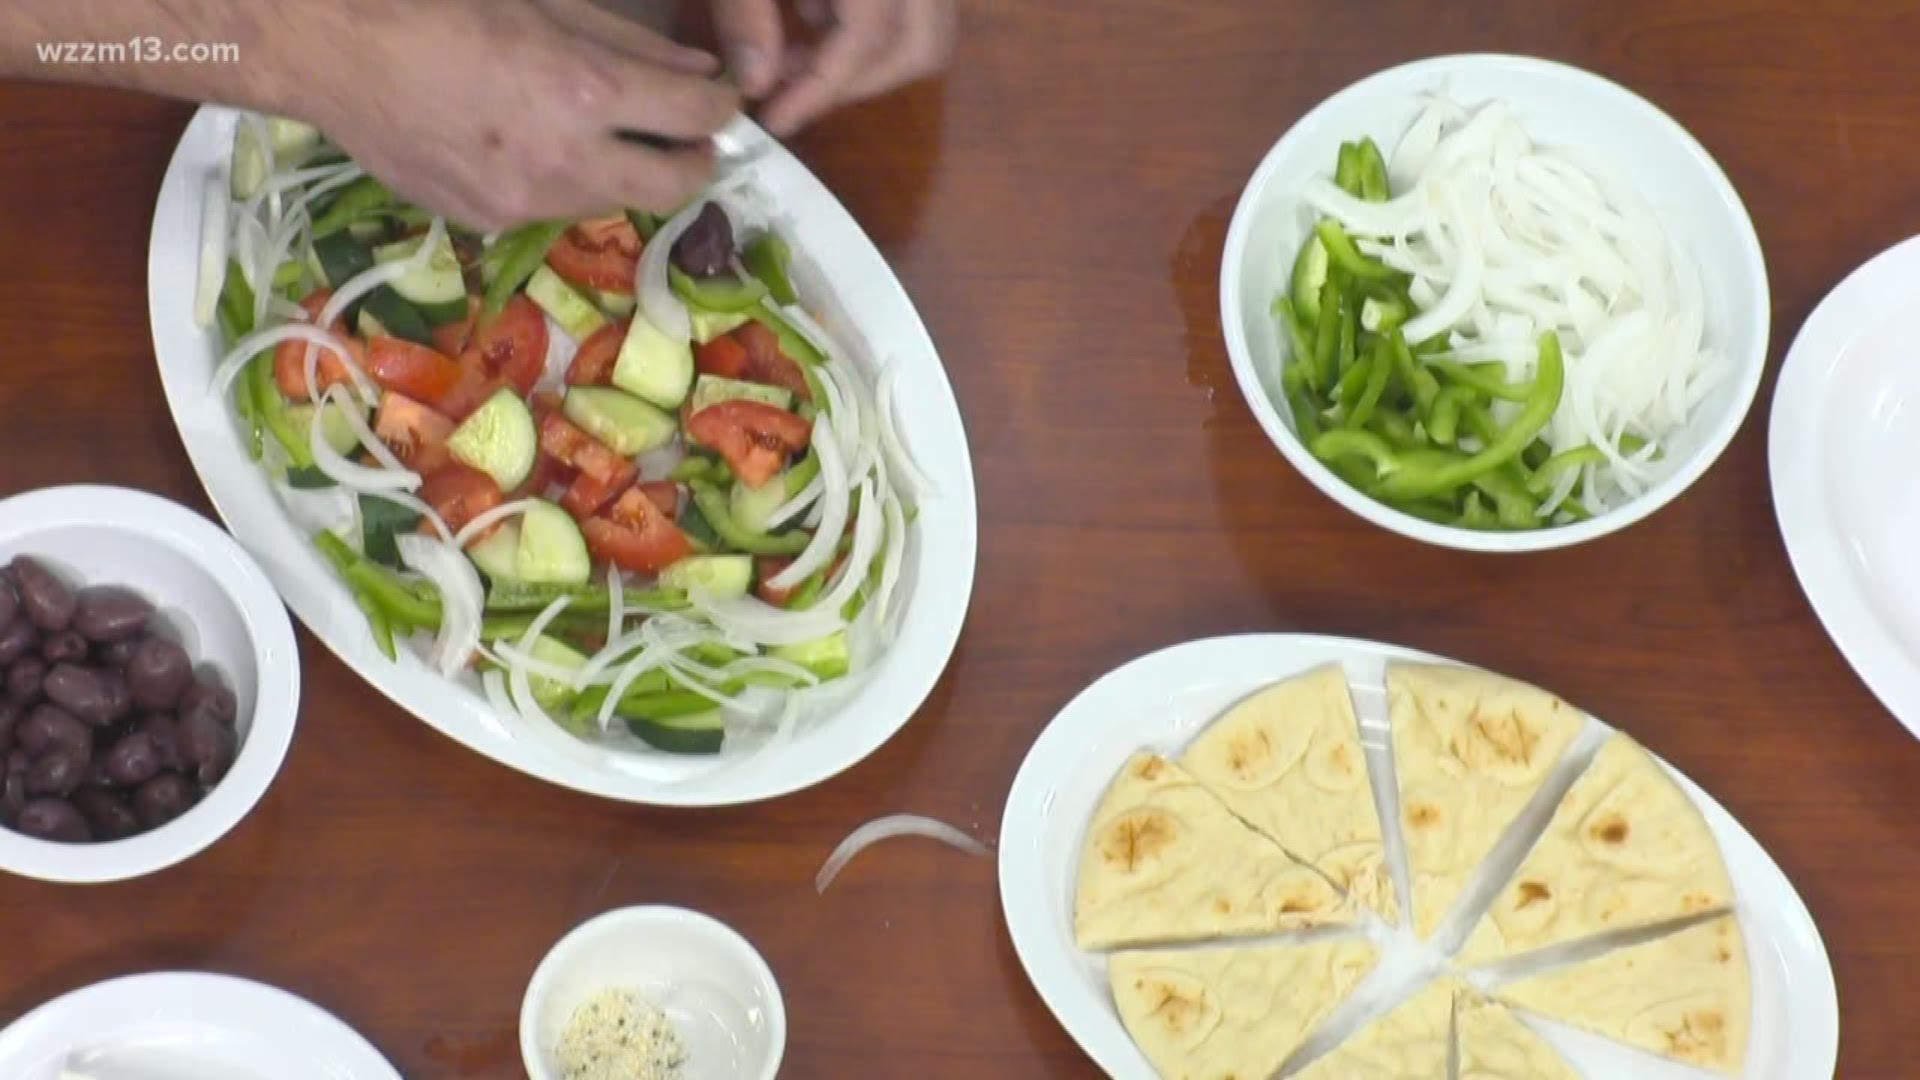 New Greek restaurant shares tasty recipes